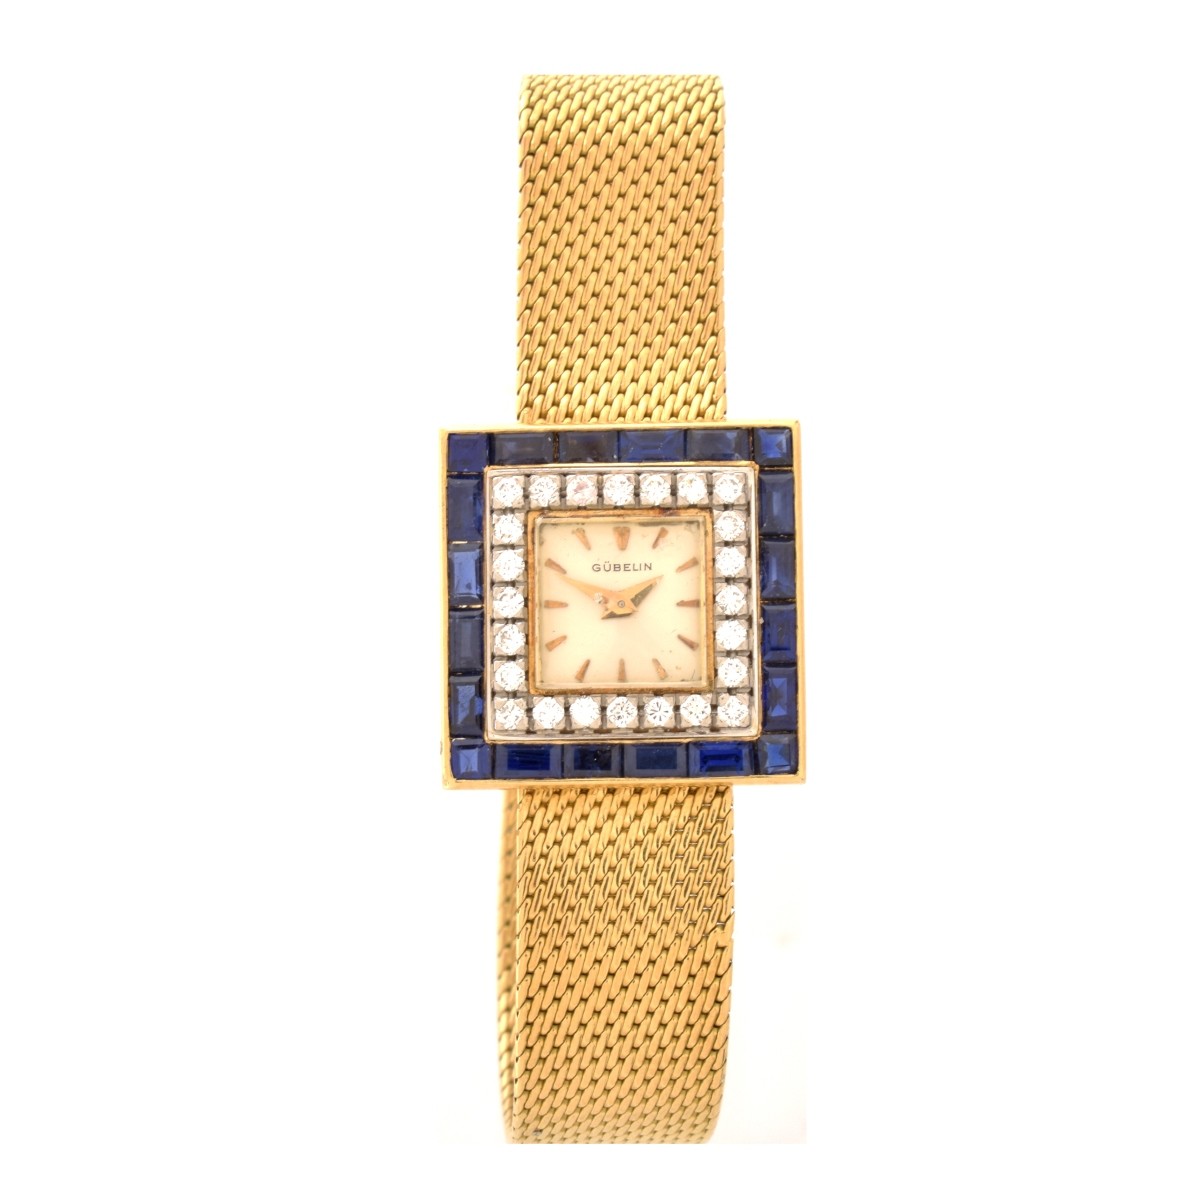 Gubelin Sapphire, Diamond and 14K Watch